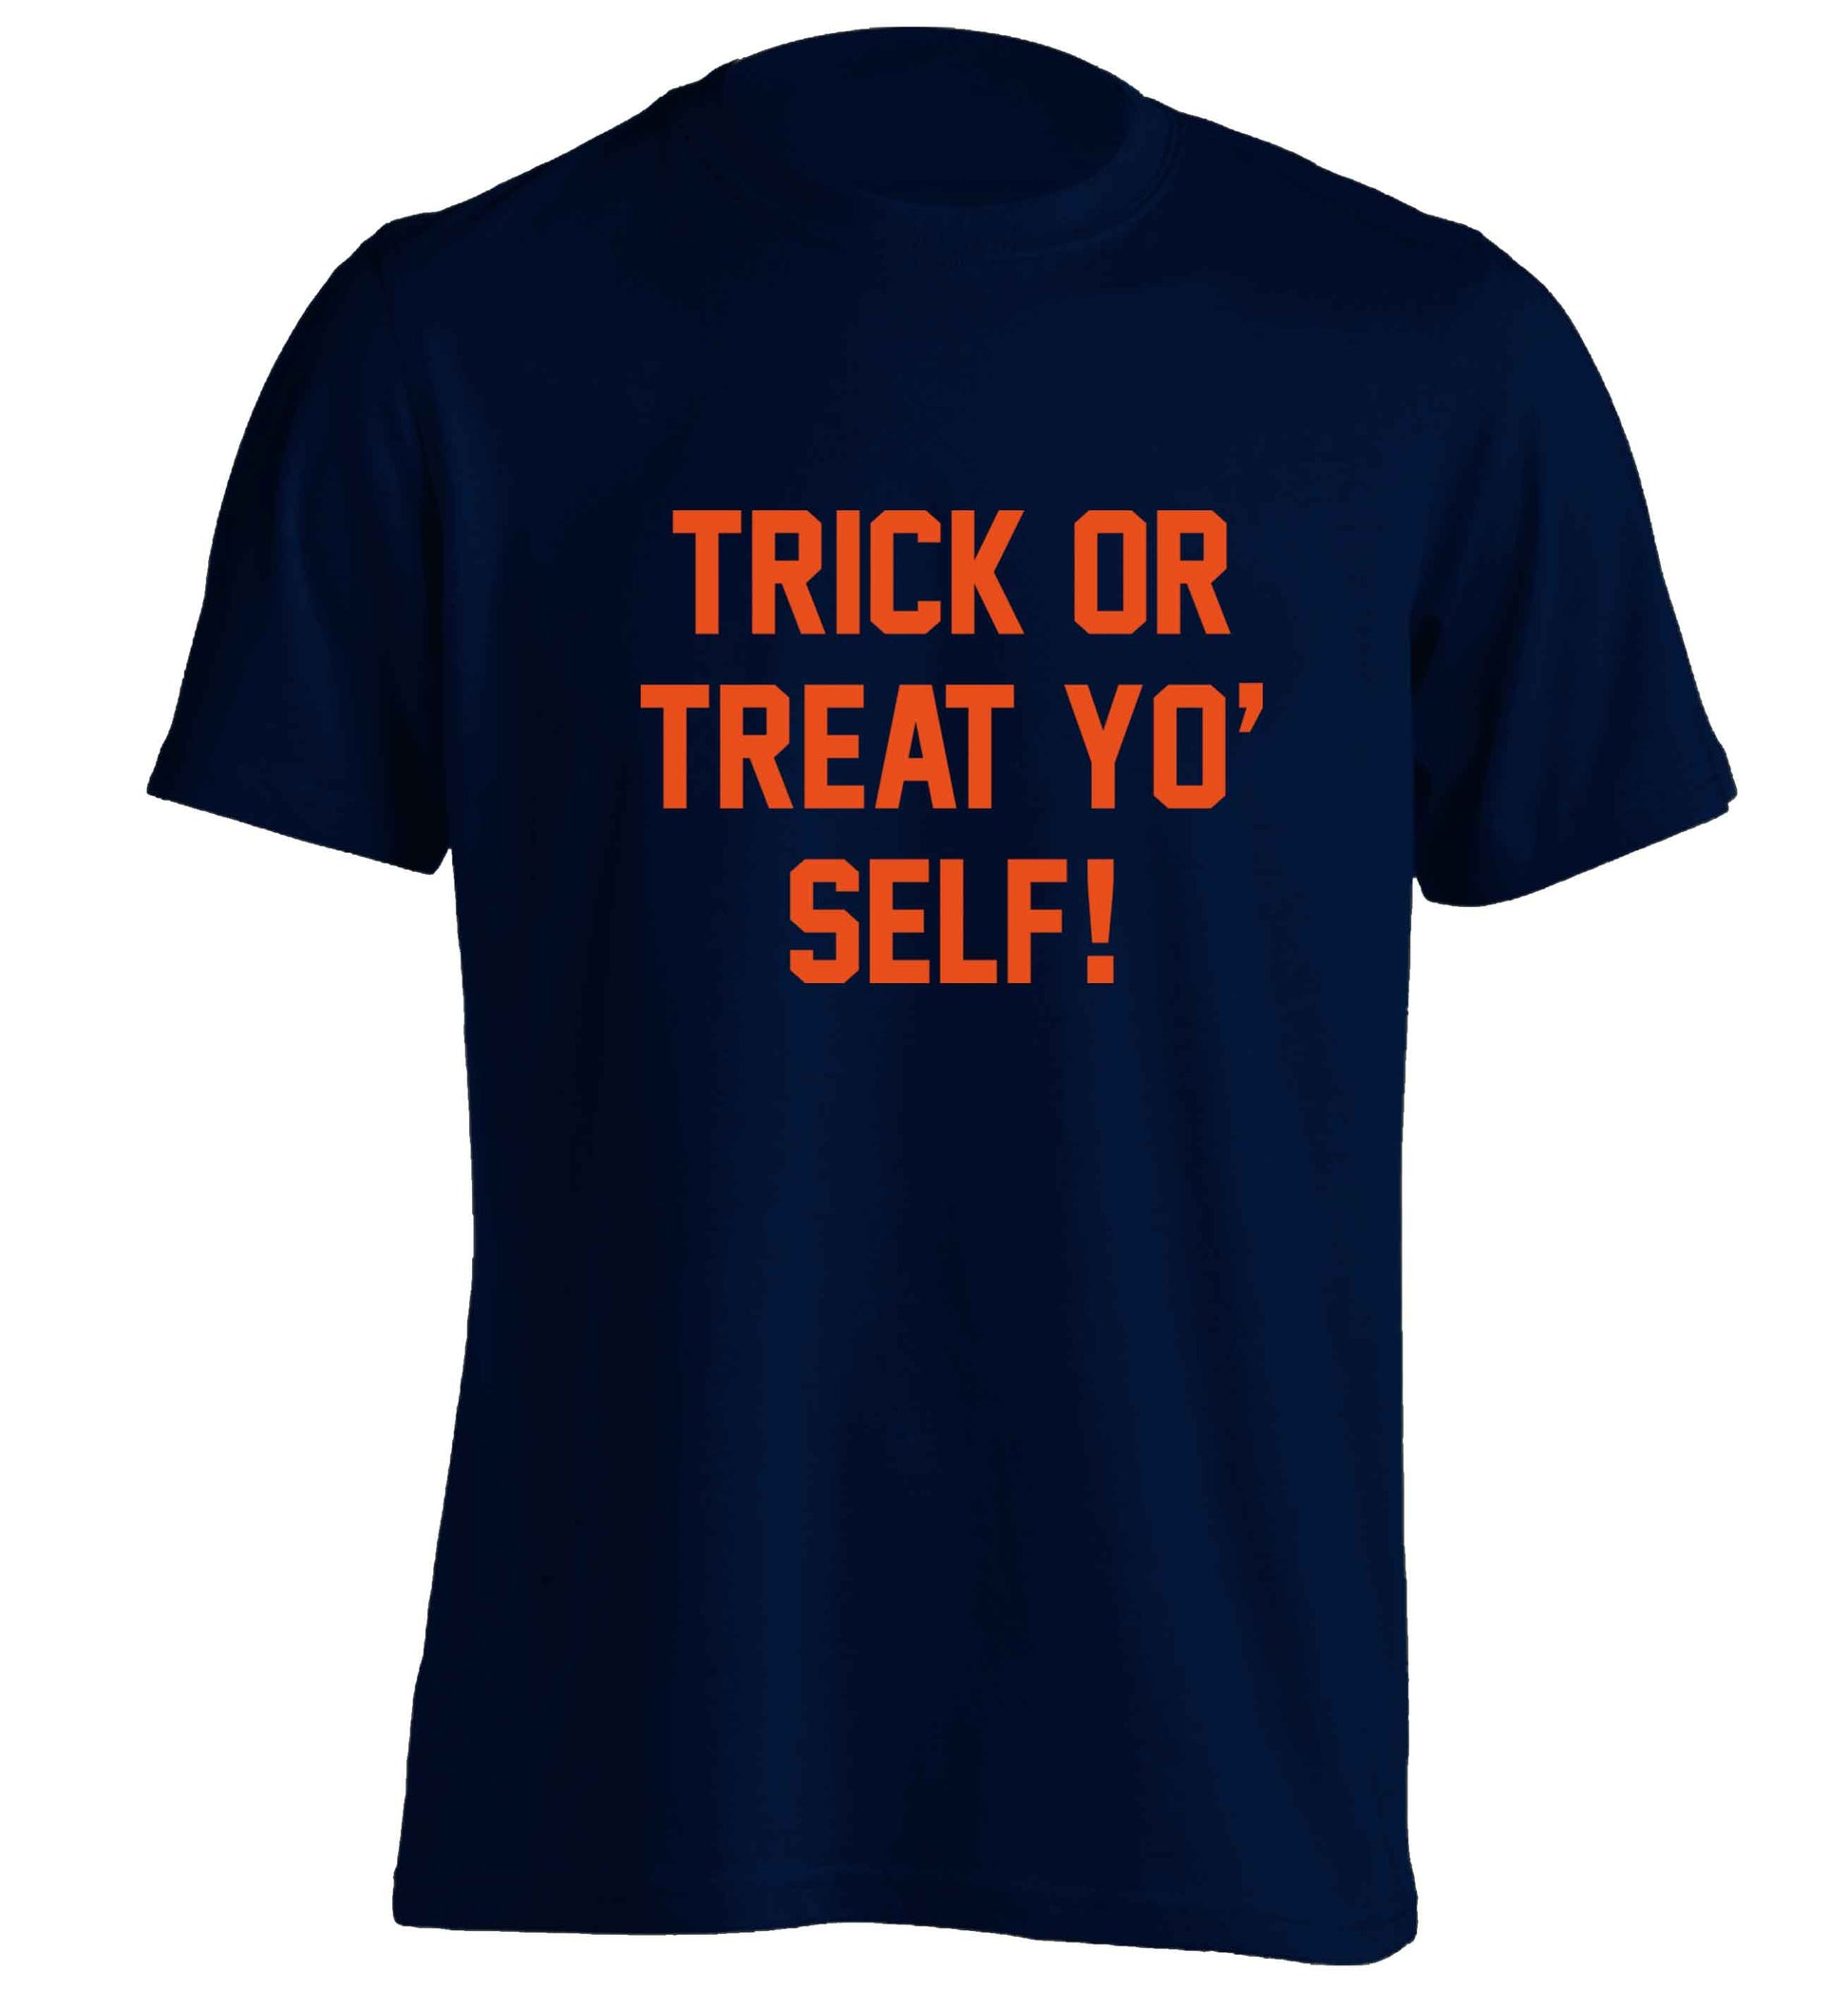 Trick or Treat Yo' Self adults unisex navy Tshirt 2XL